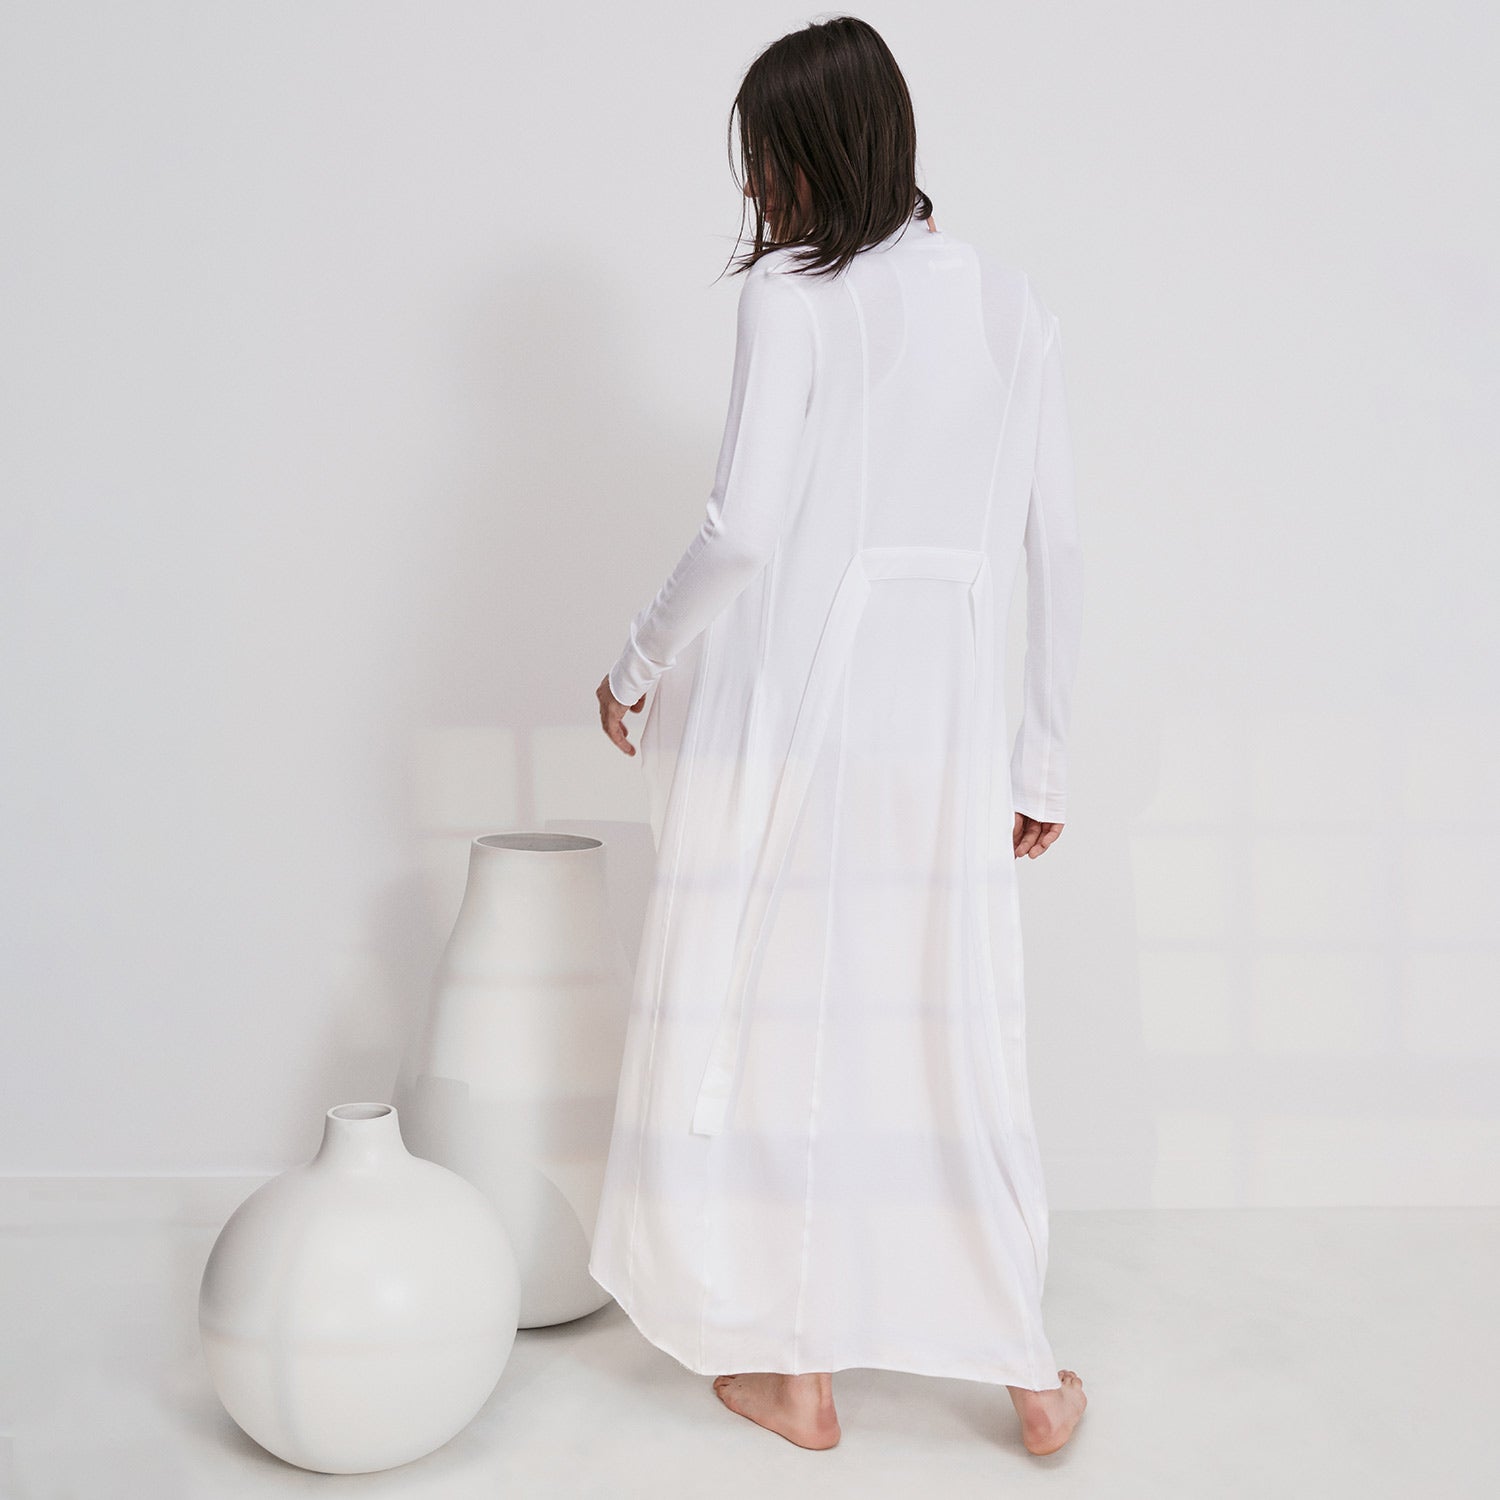 Lunya Sleepwear The Robe - #Sincere White